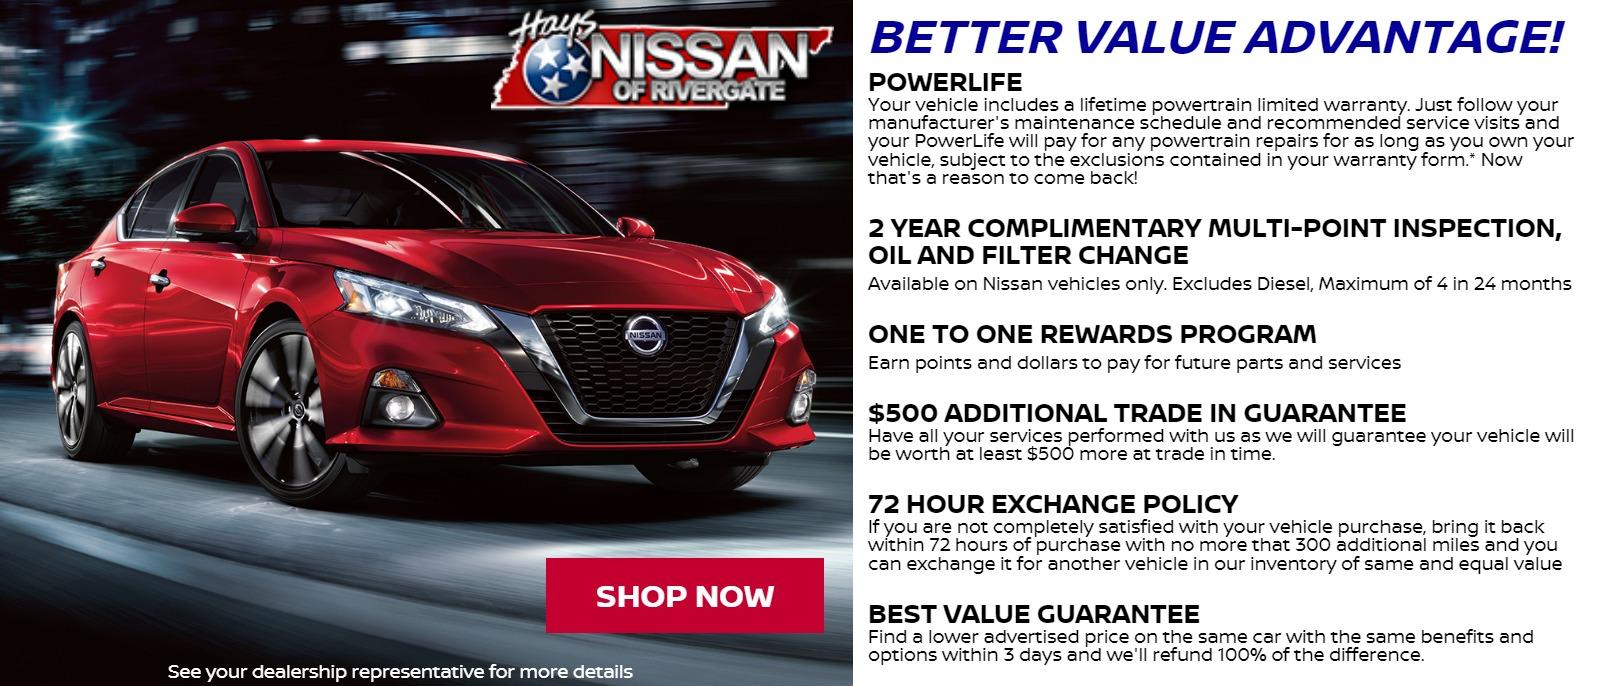 Nissan of Rivergate Better Value Advantage